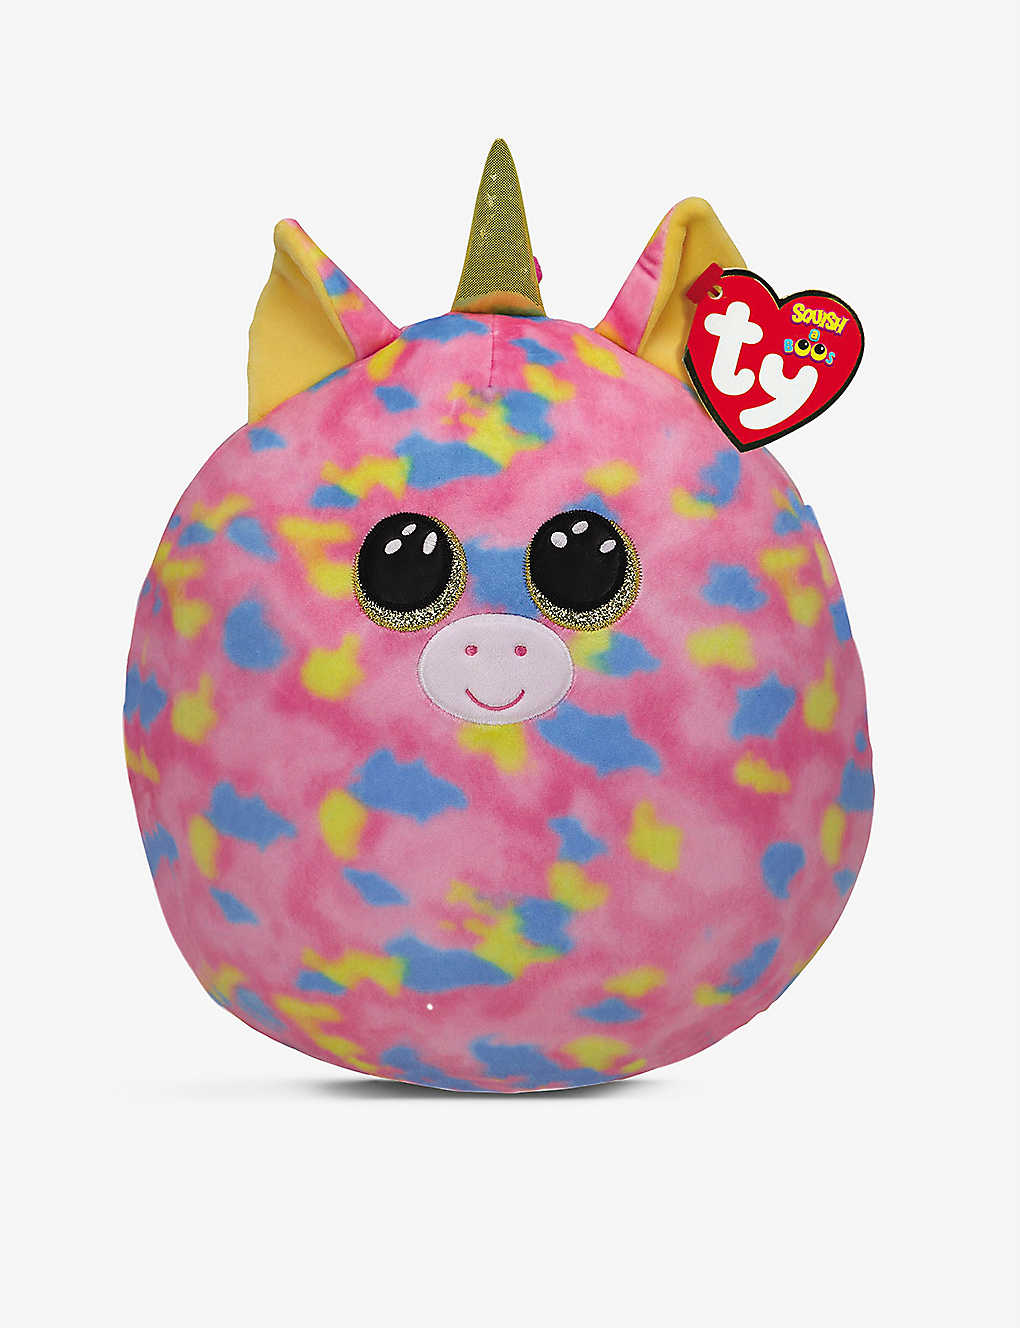 Ty Beanie Boo Shoulder Bags Fantasia the Unicorn Plush Bag Purse Soft Toy 